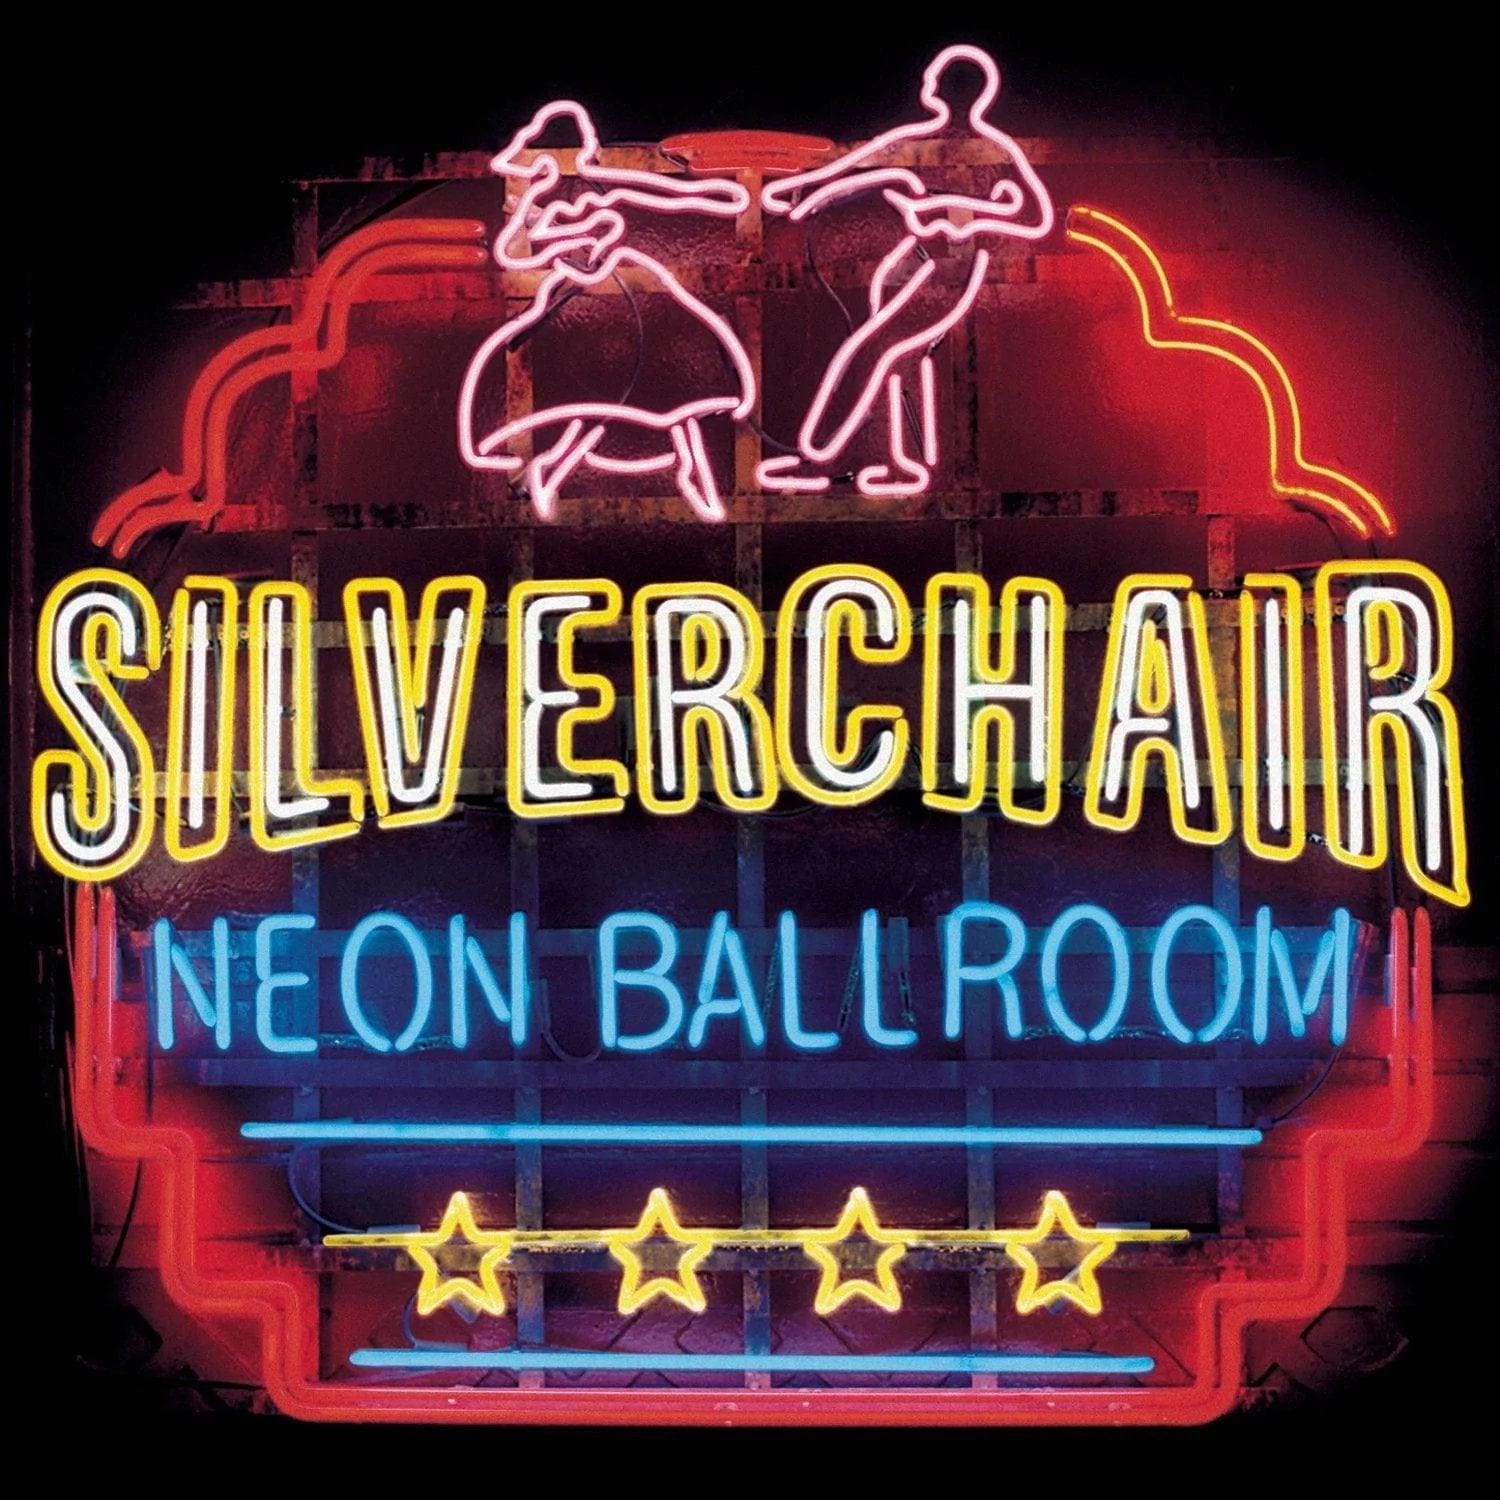 SILVERCHAIR - Neon Ballroom Vinyl - JWrayRecords